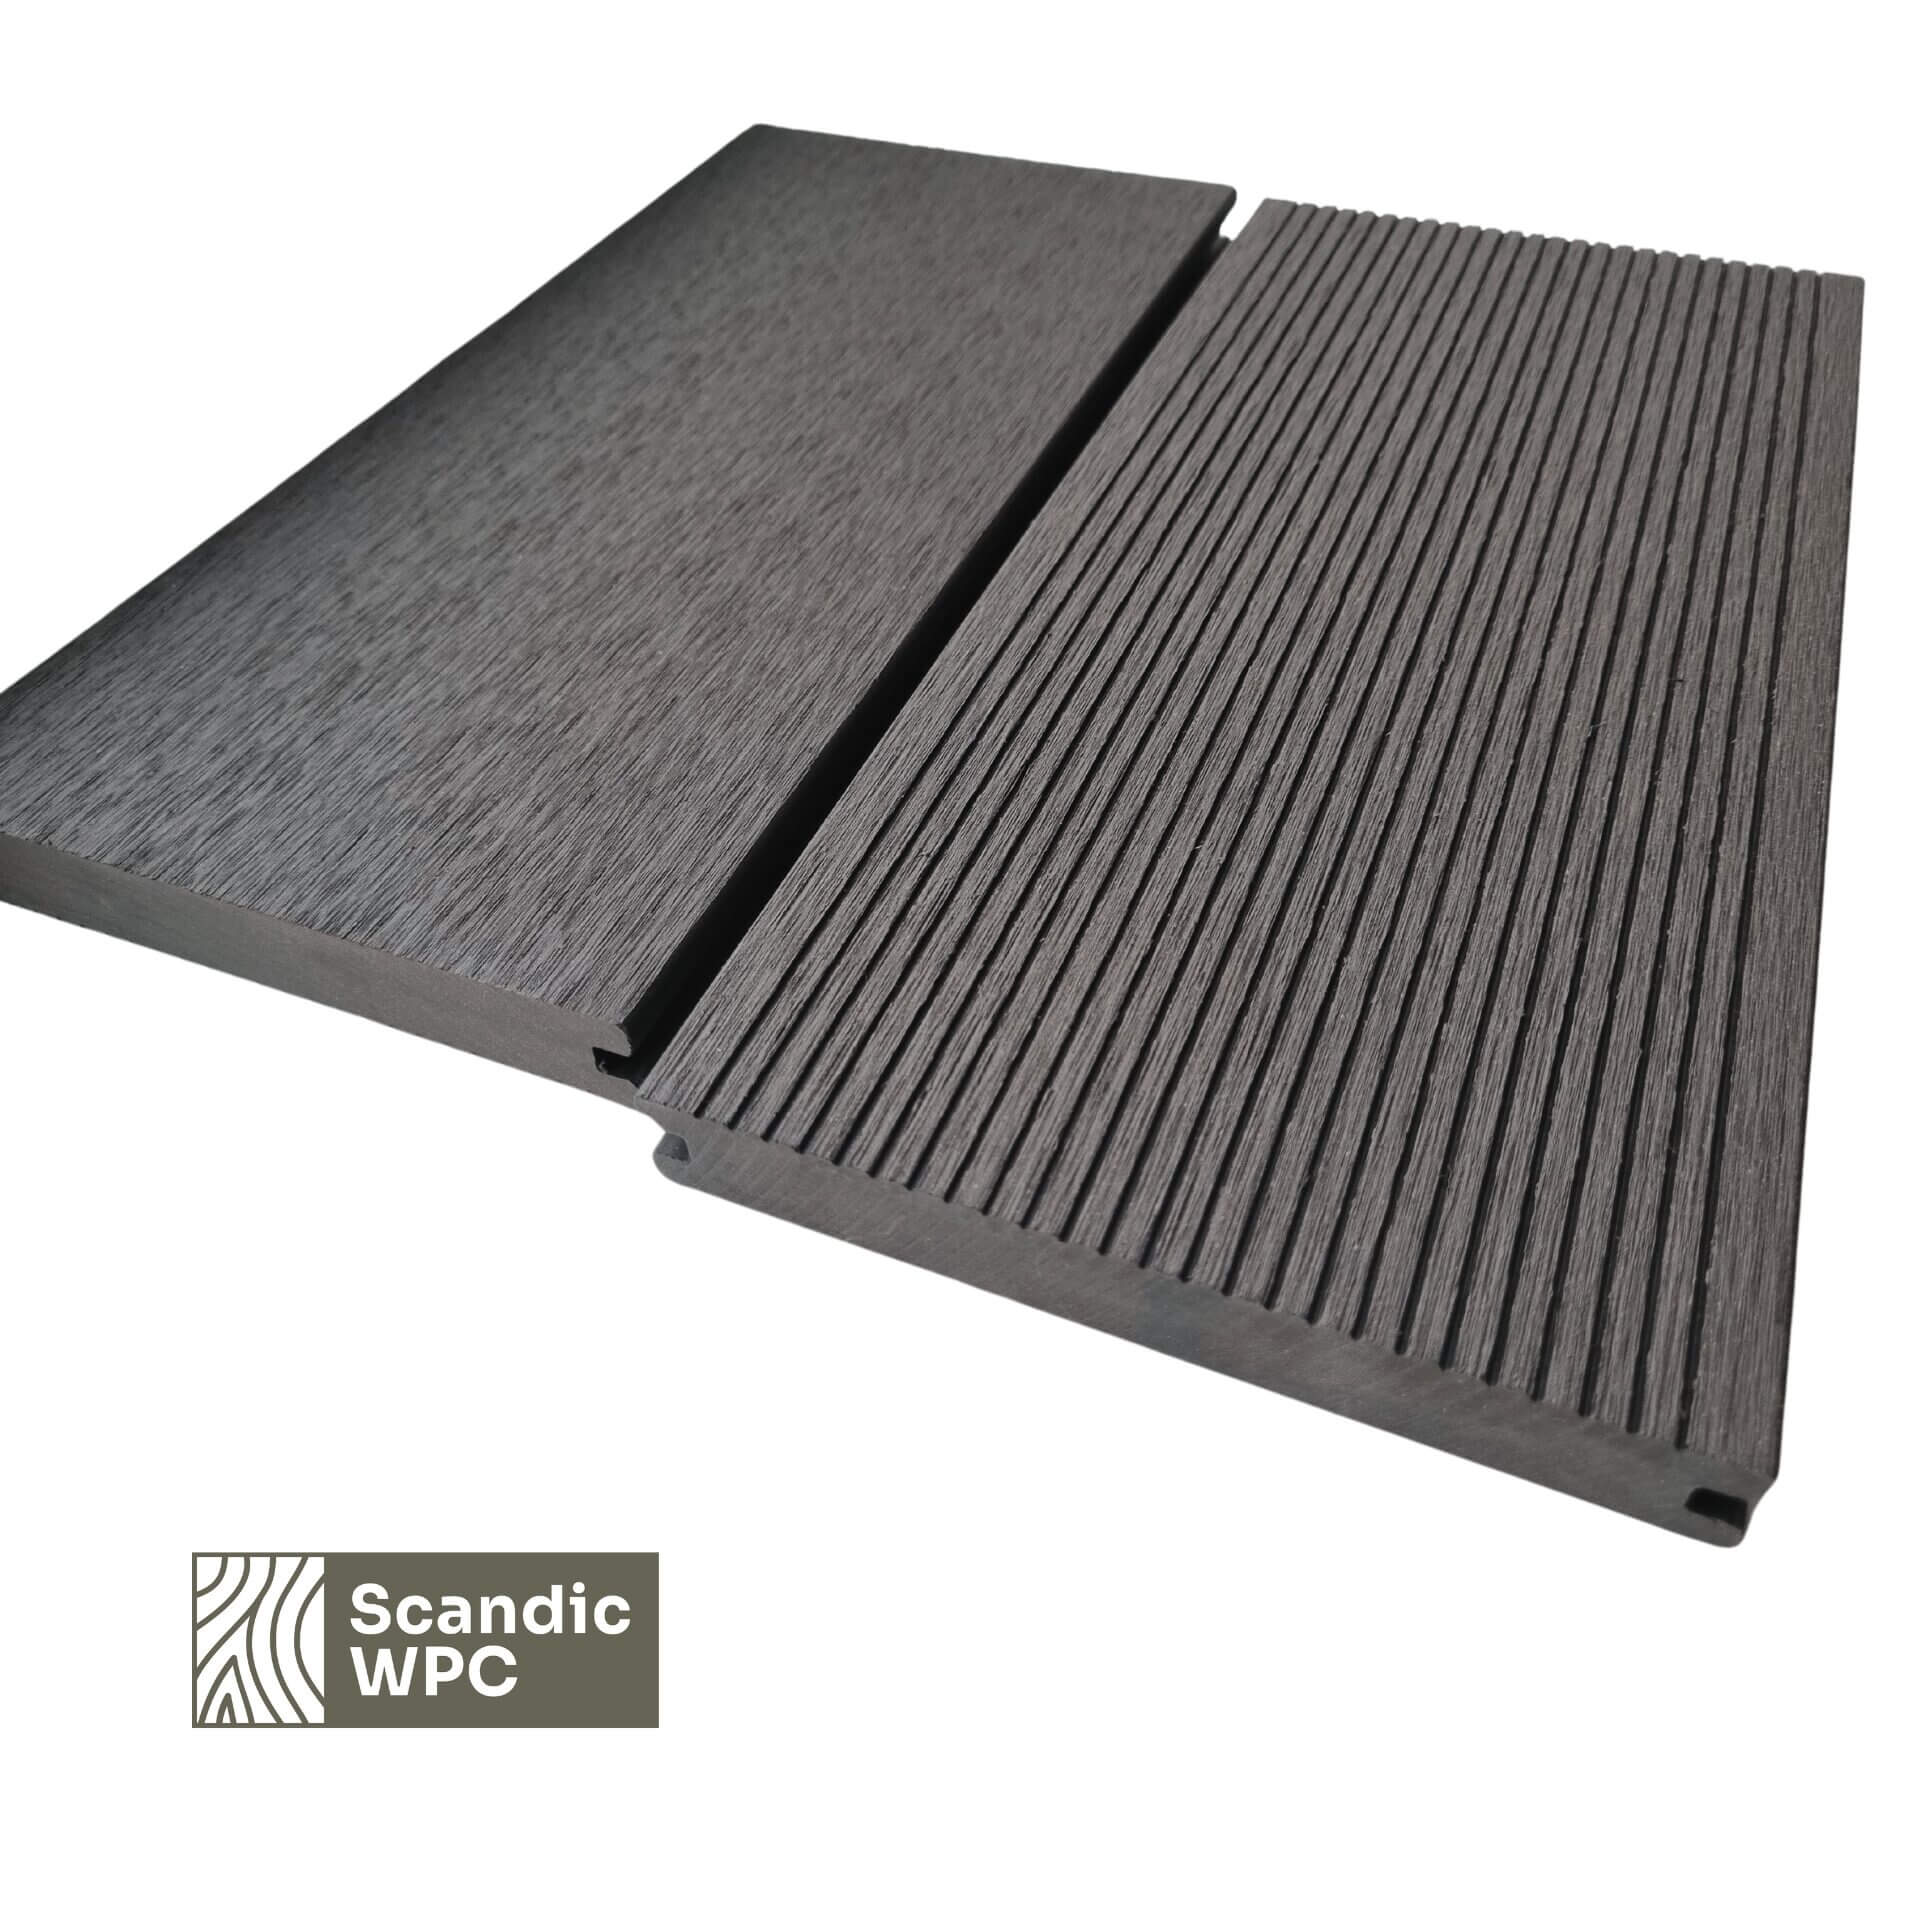 scandic wpc solid volcanic grey (2)